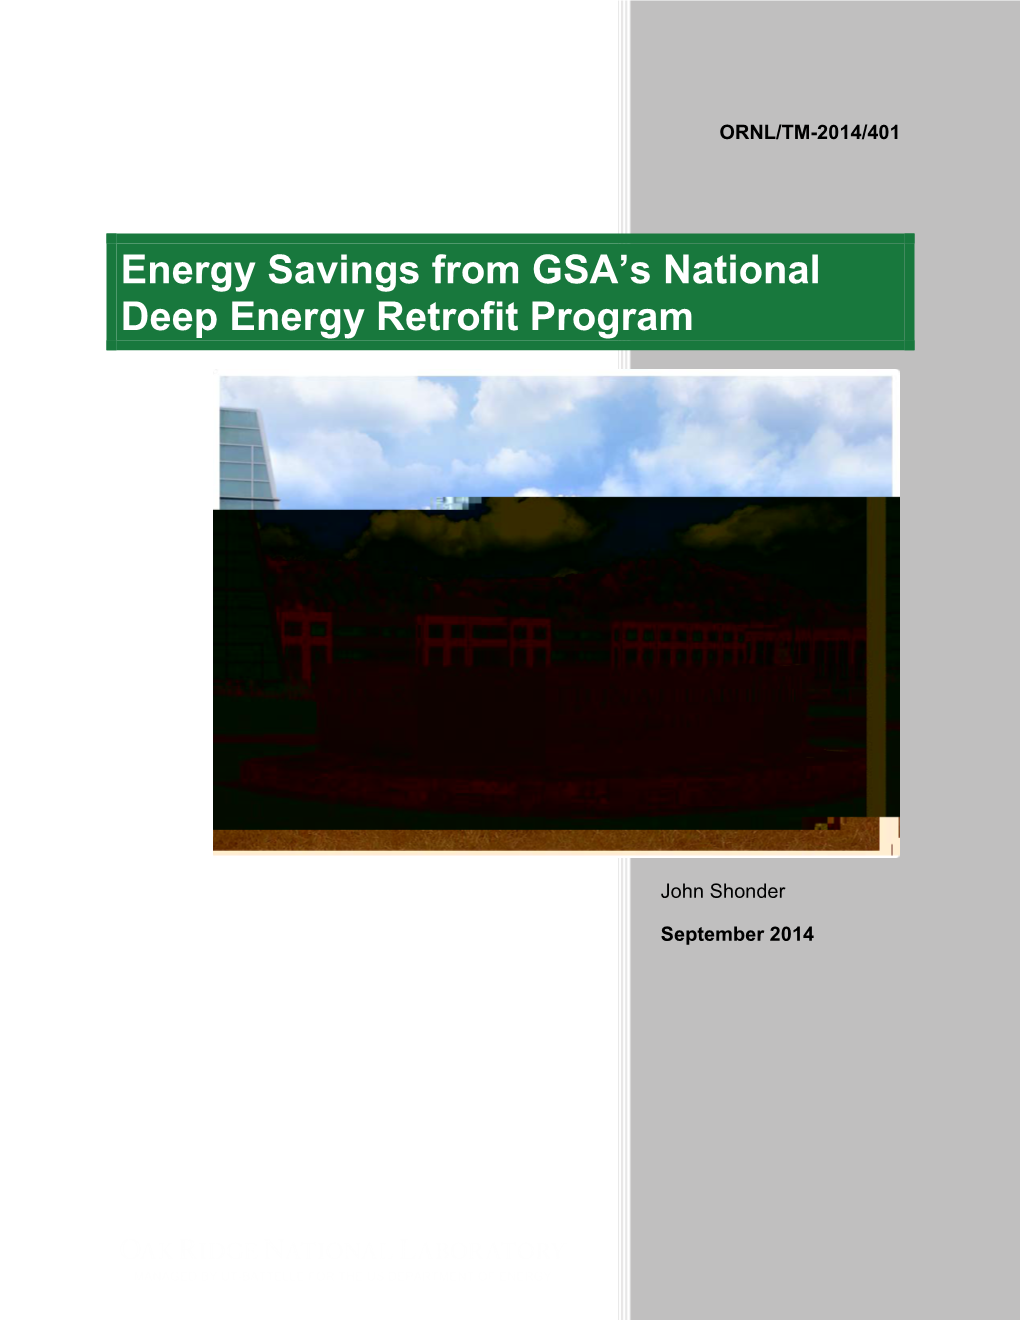 Energy Savings from GSA's National Deep Energy Retrofit Program